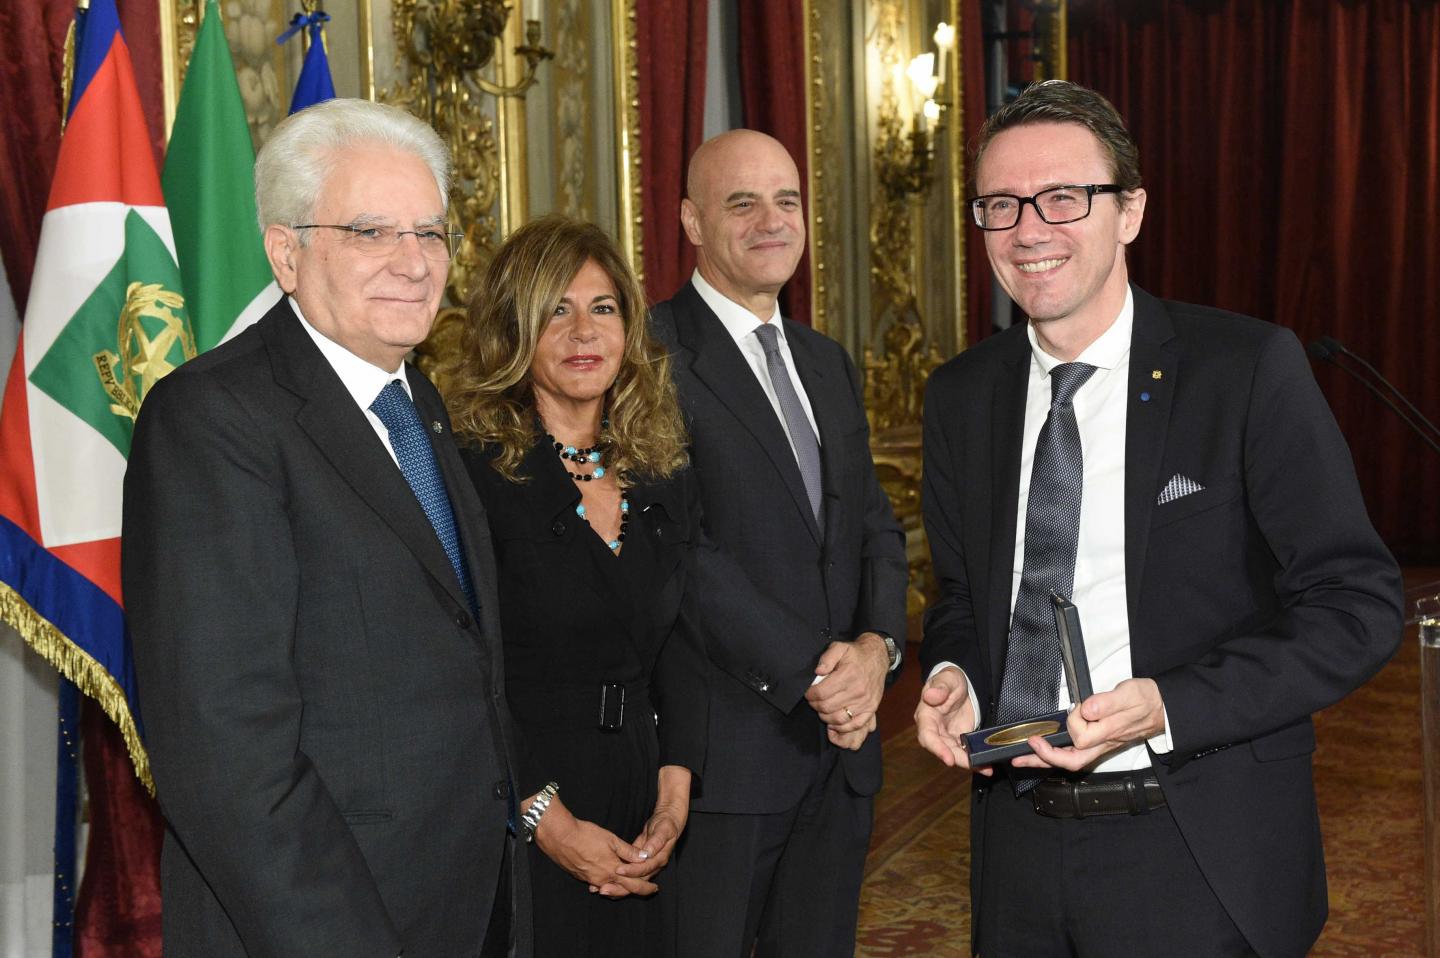 Jens Nielsen Receives ENI Award